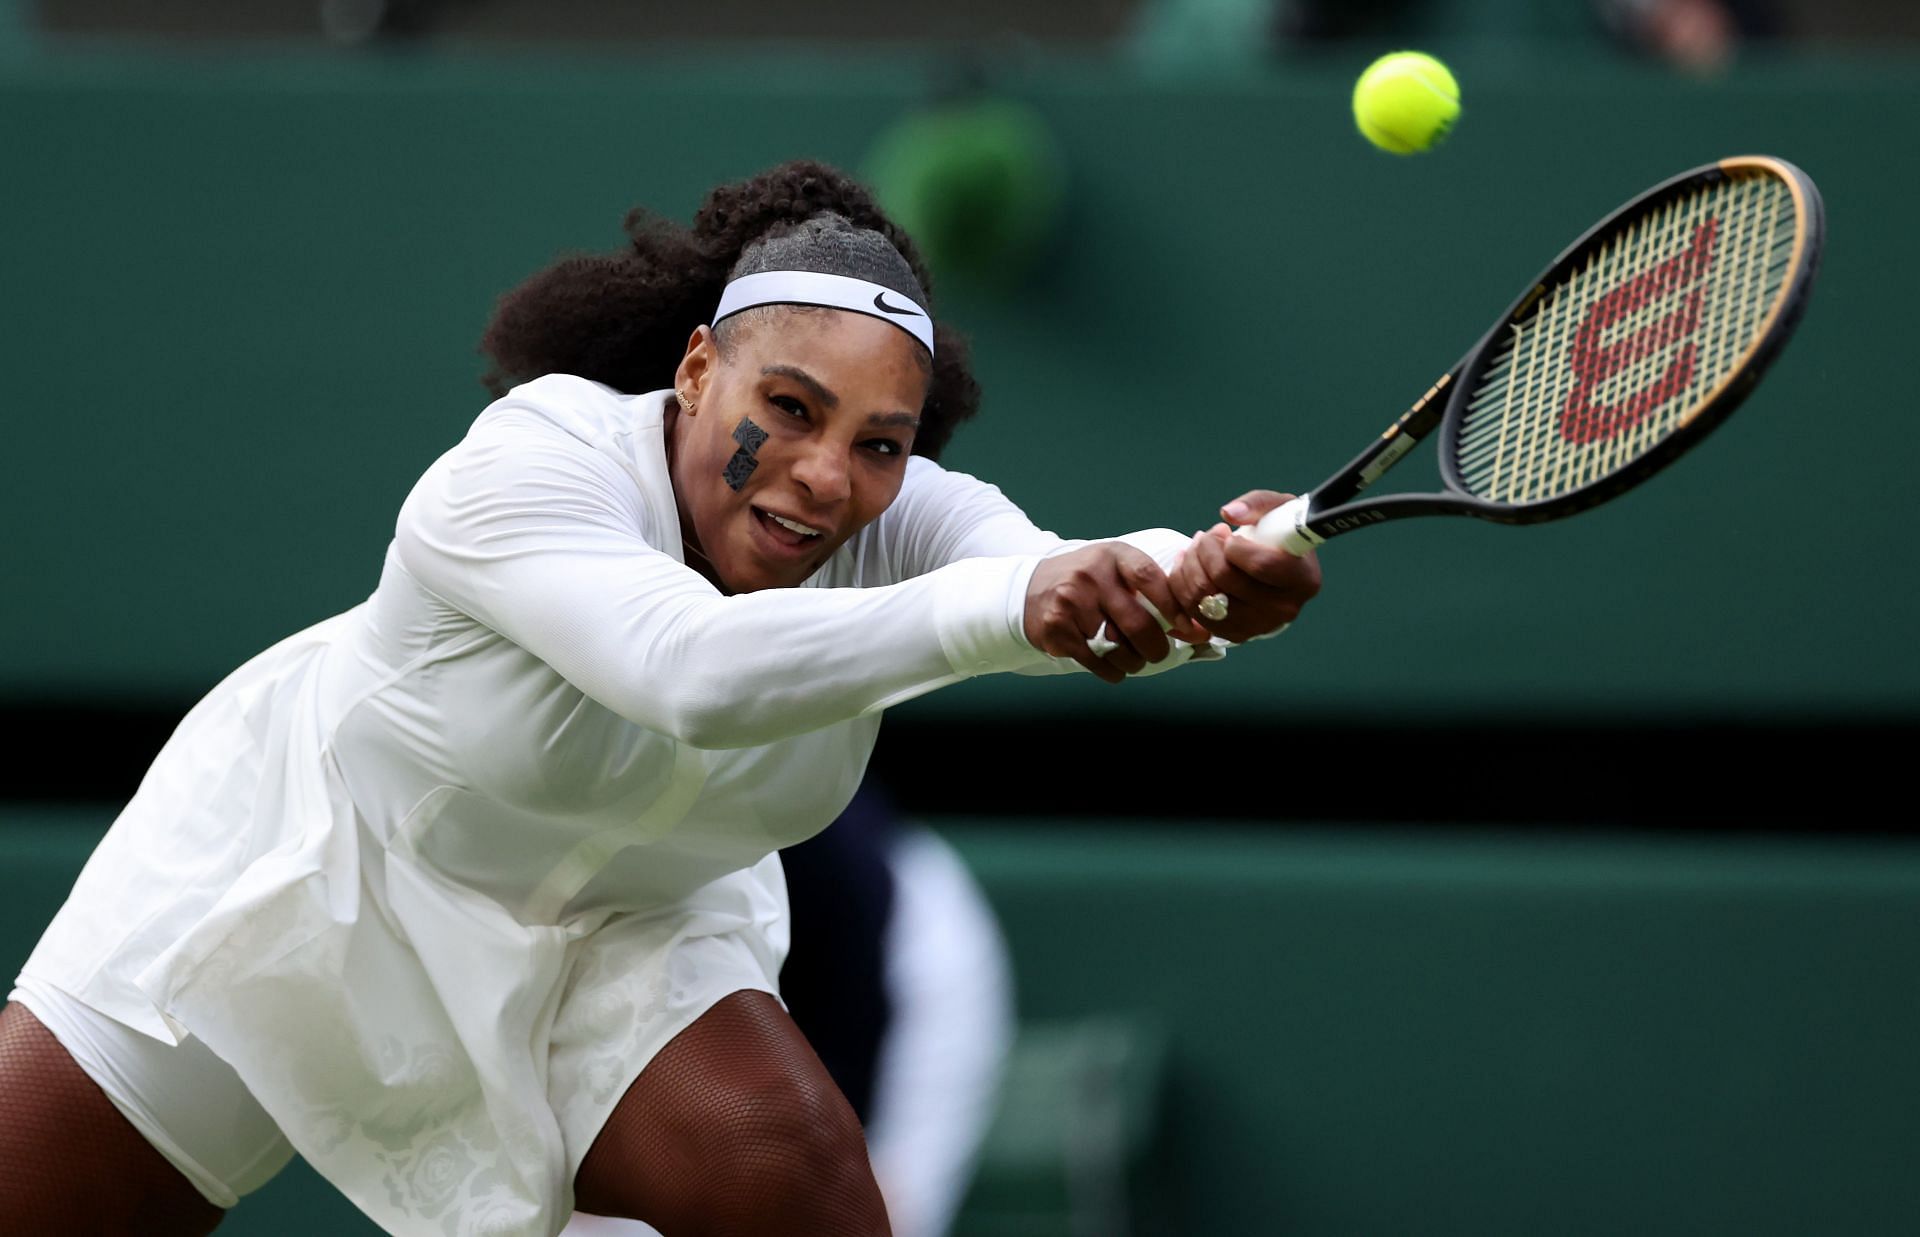 Serena Williams in action at Wimbledon 2022